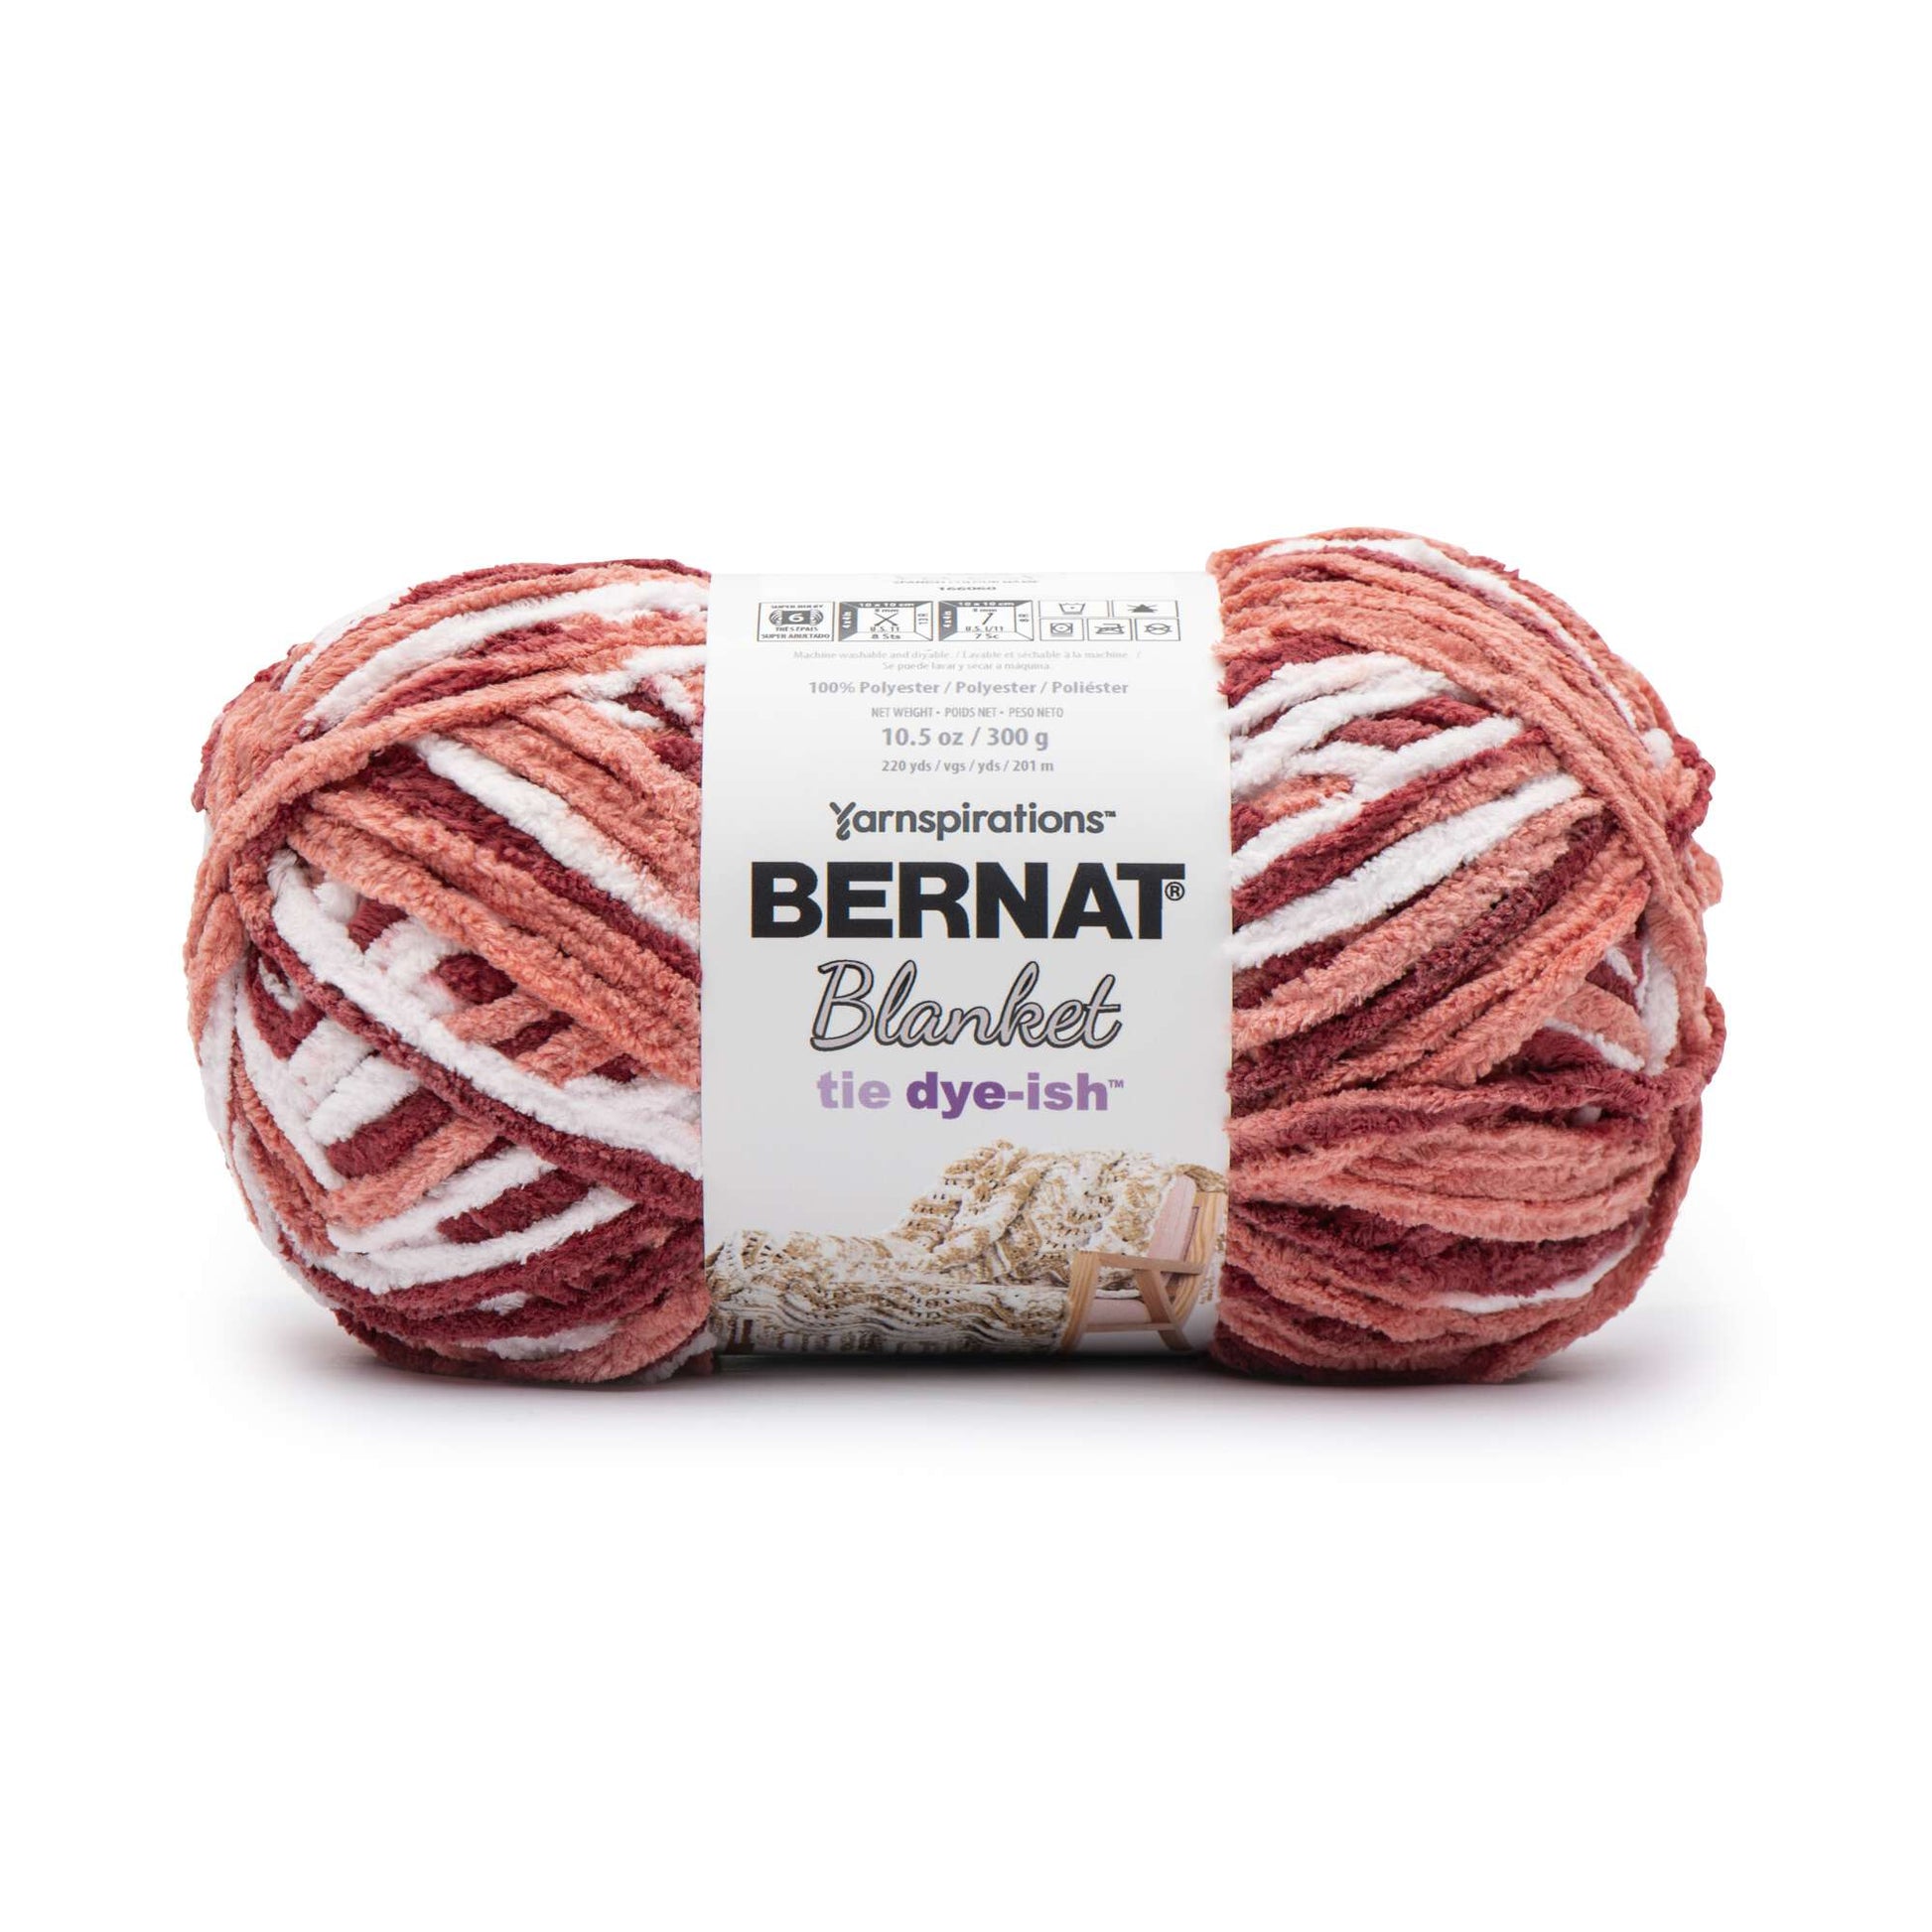 Bernat Blanket Tie Dye-ish Yarn (300g/10.5oz) | Yarnspirations